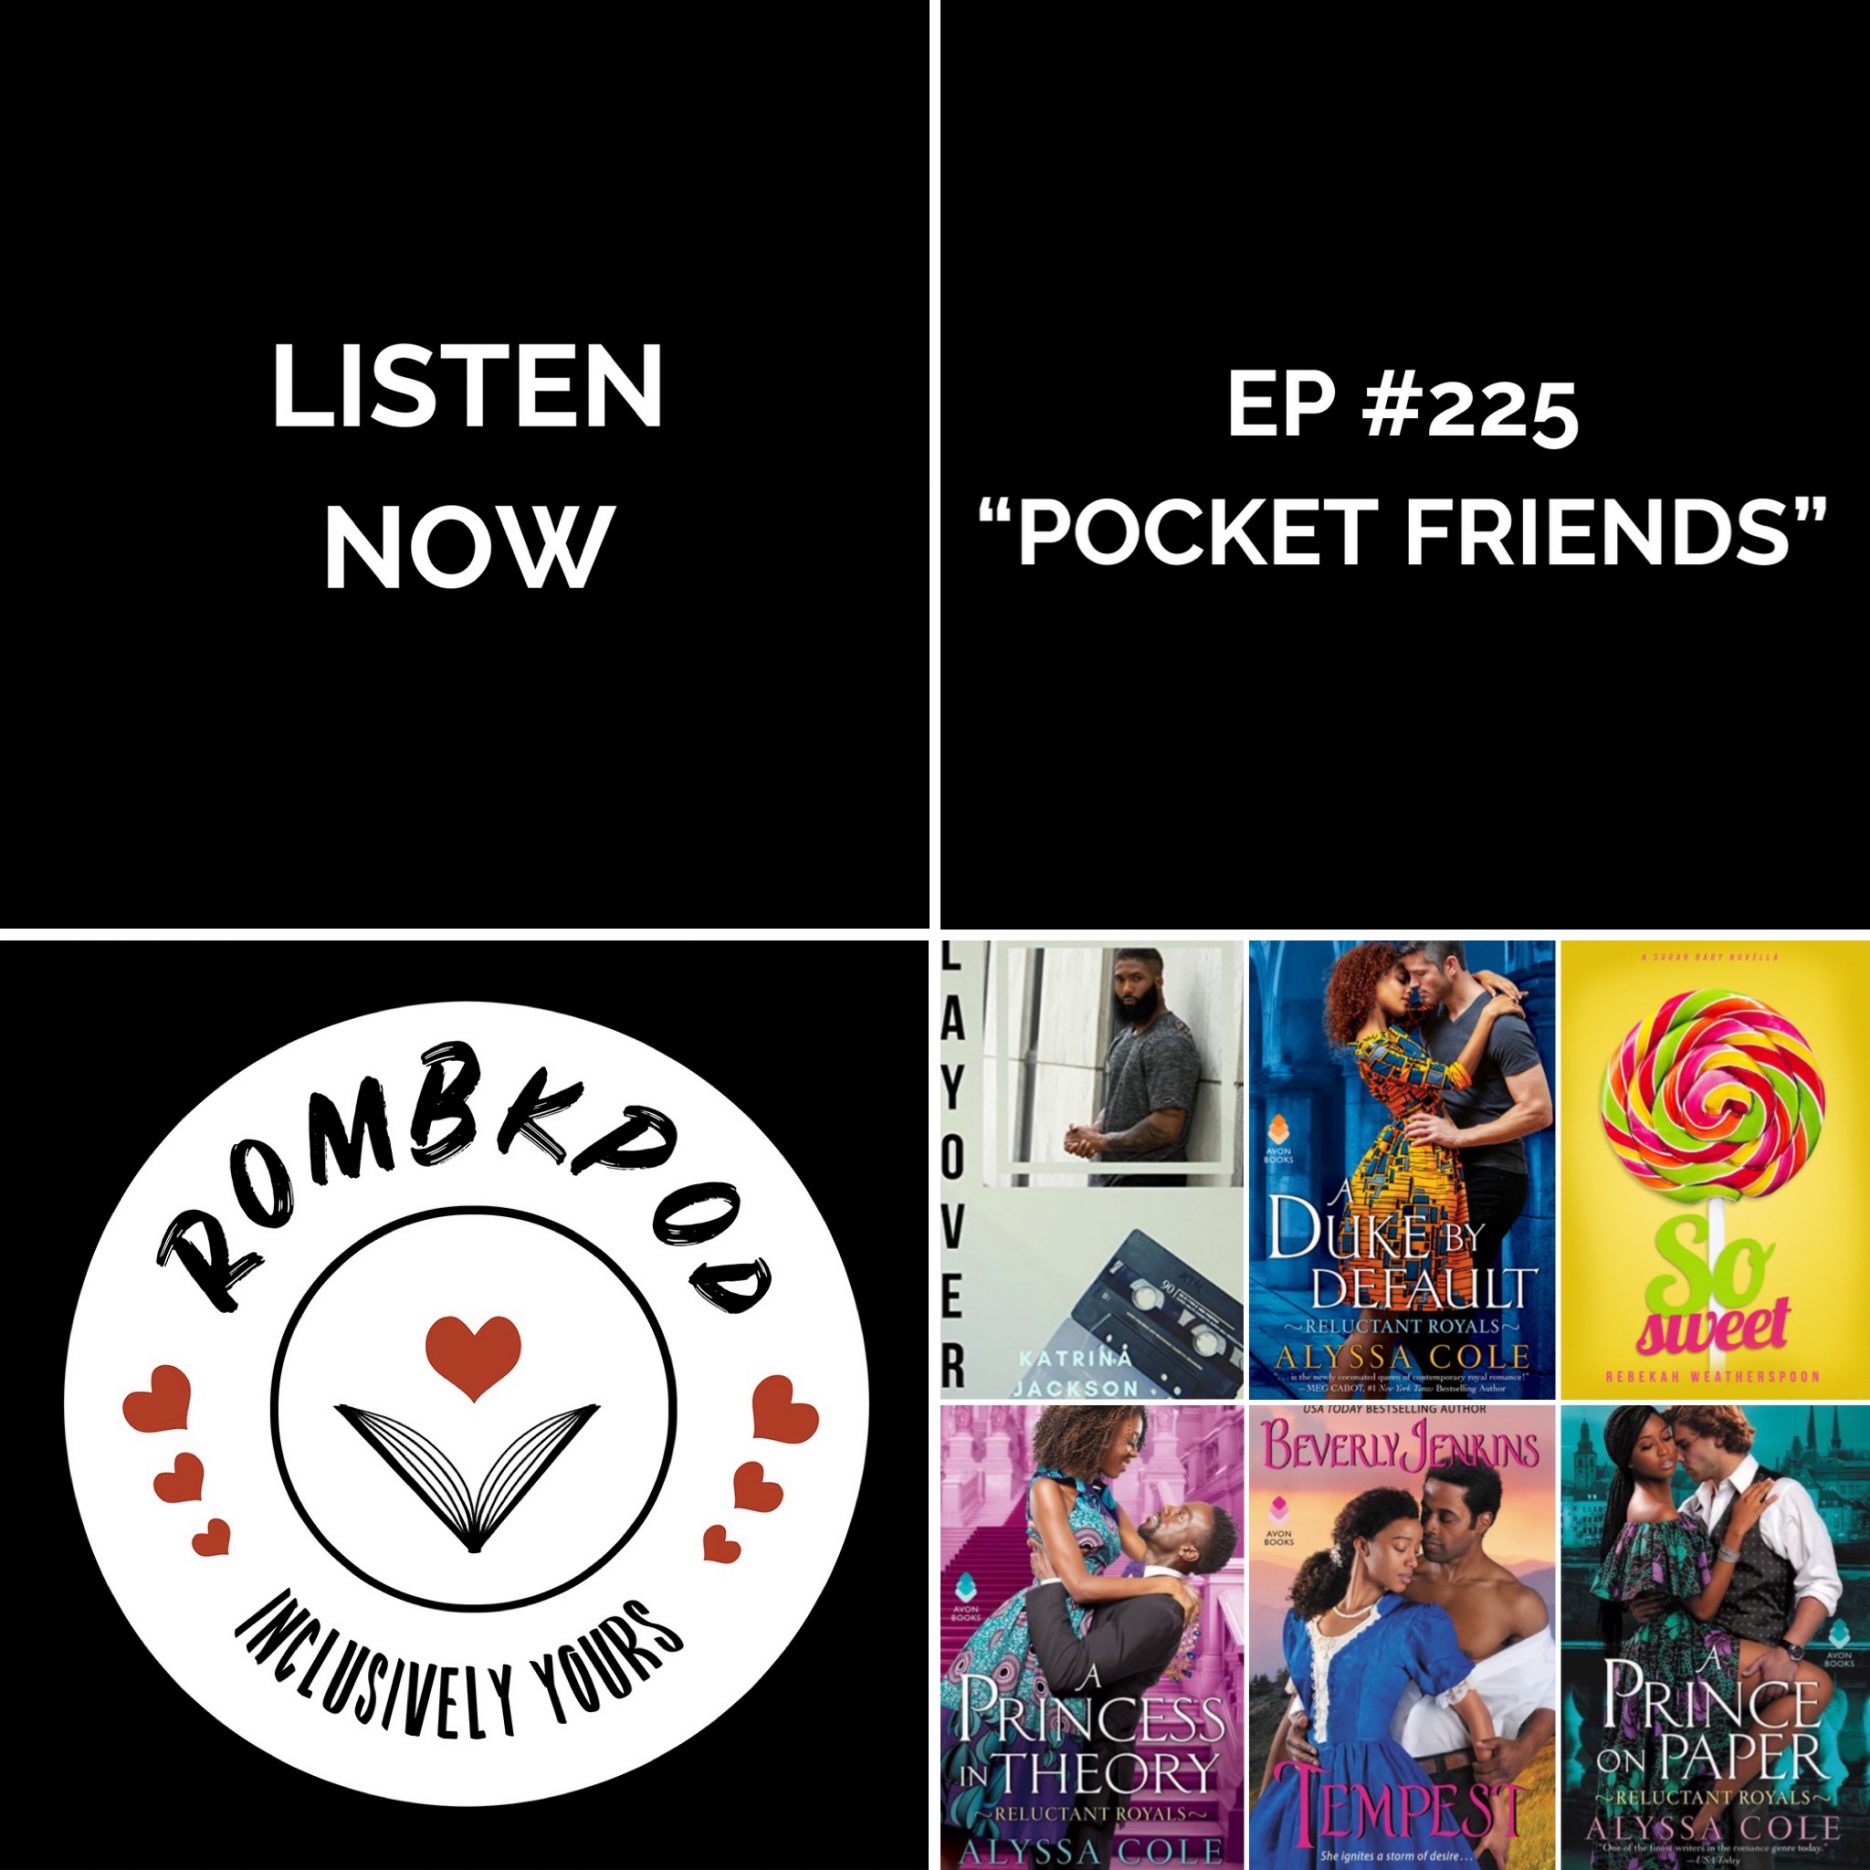 IMAGE: lower left corner, RomBkPod heart logo; lower right corner, ep #225 book cover collage; IMAGE TEXT: Listen Now, ep #225 "Pocket Friends"